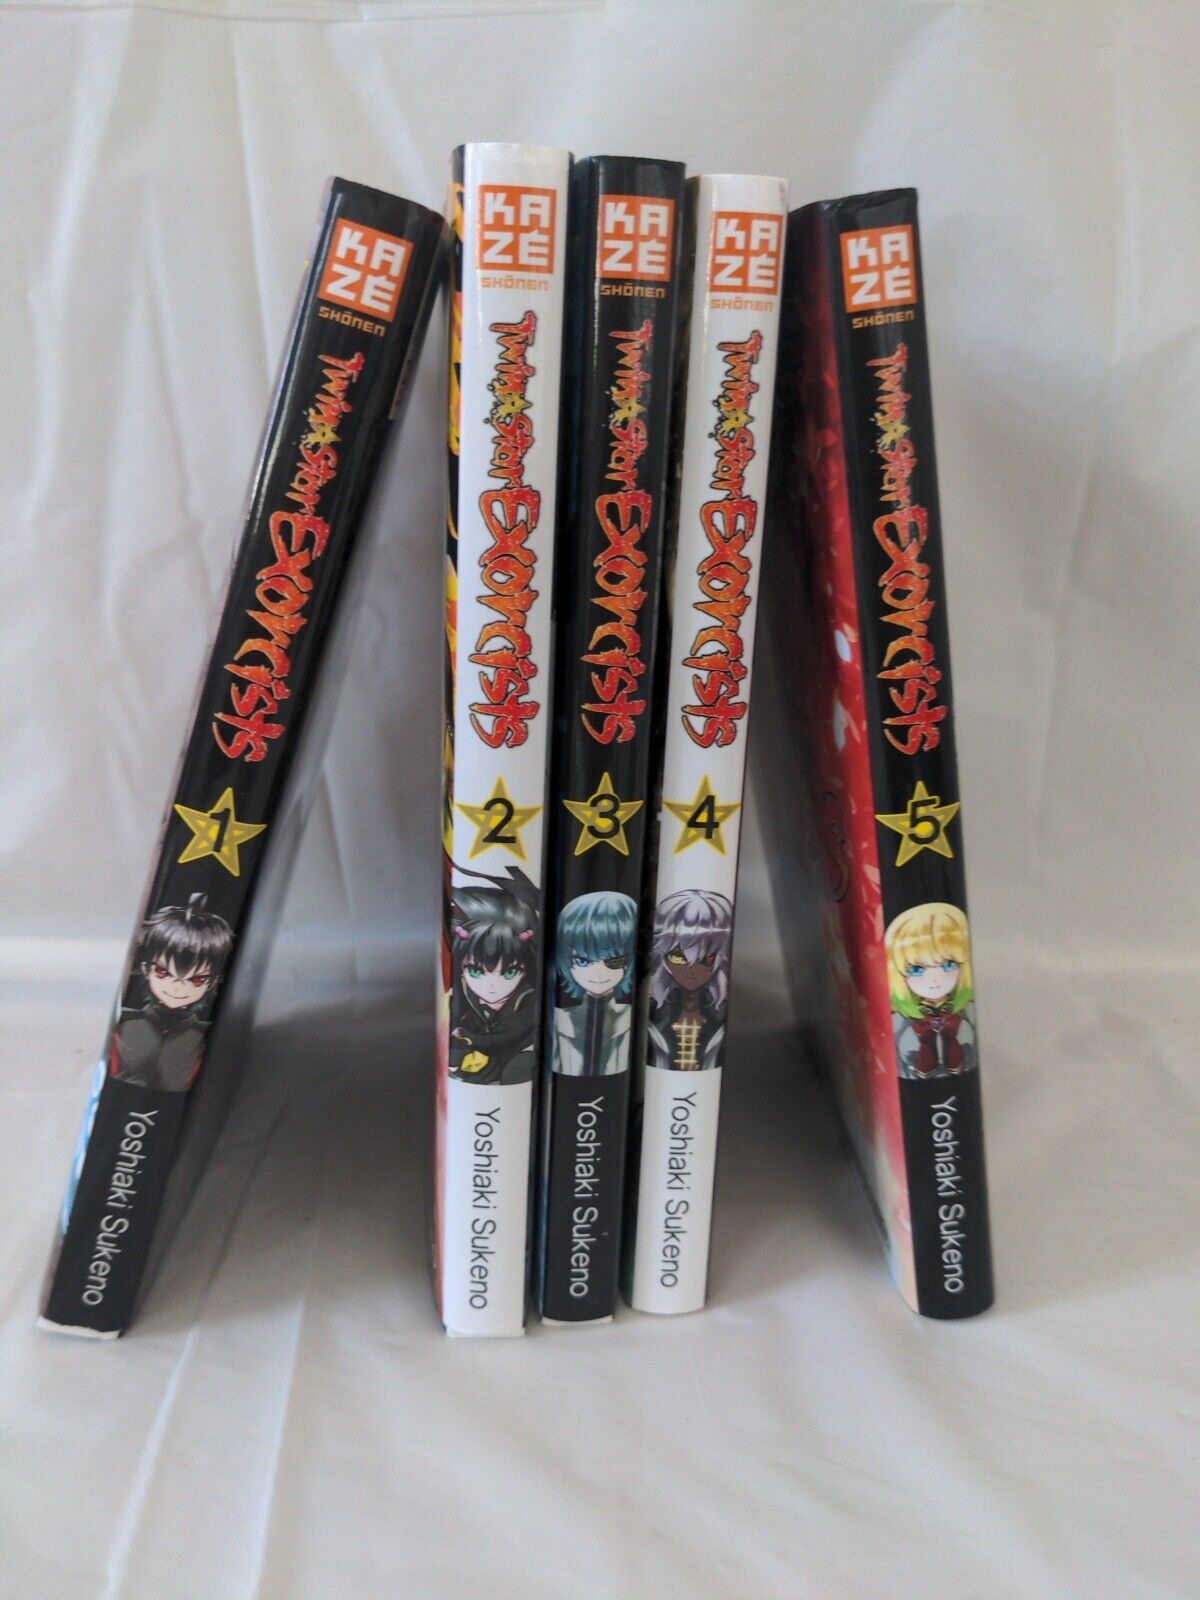 Twin Star Exorcists Book Lot by Yoshiaki Sukeno Series 1-5 Manga Anime French